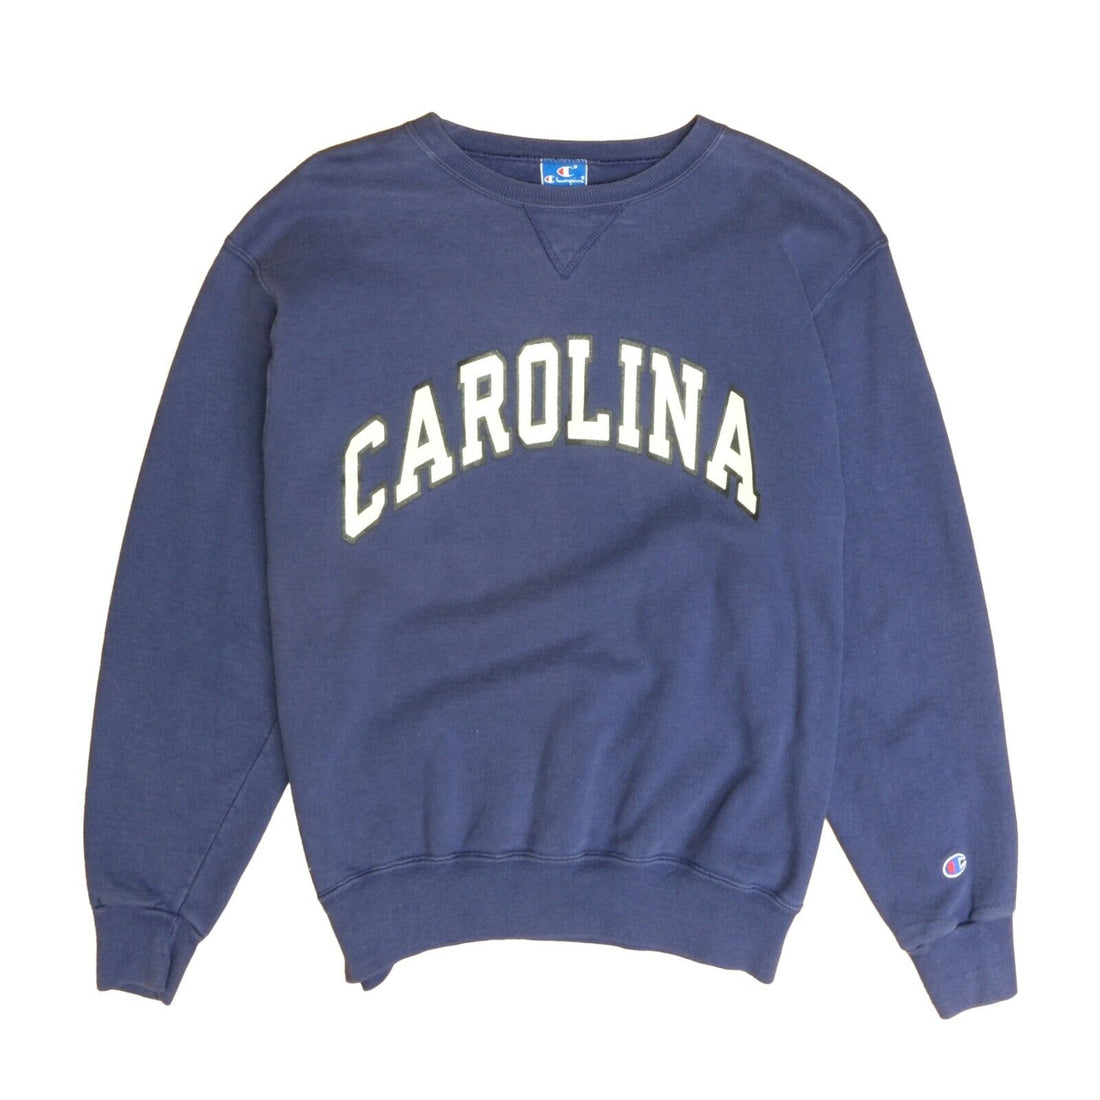 Vintage Carolina Champion Sweatshirt Crewneck Size XL 80s NCAA